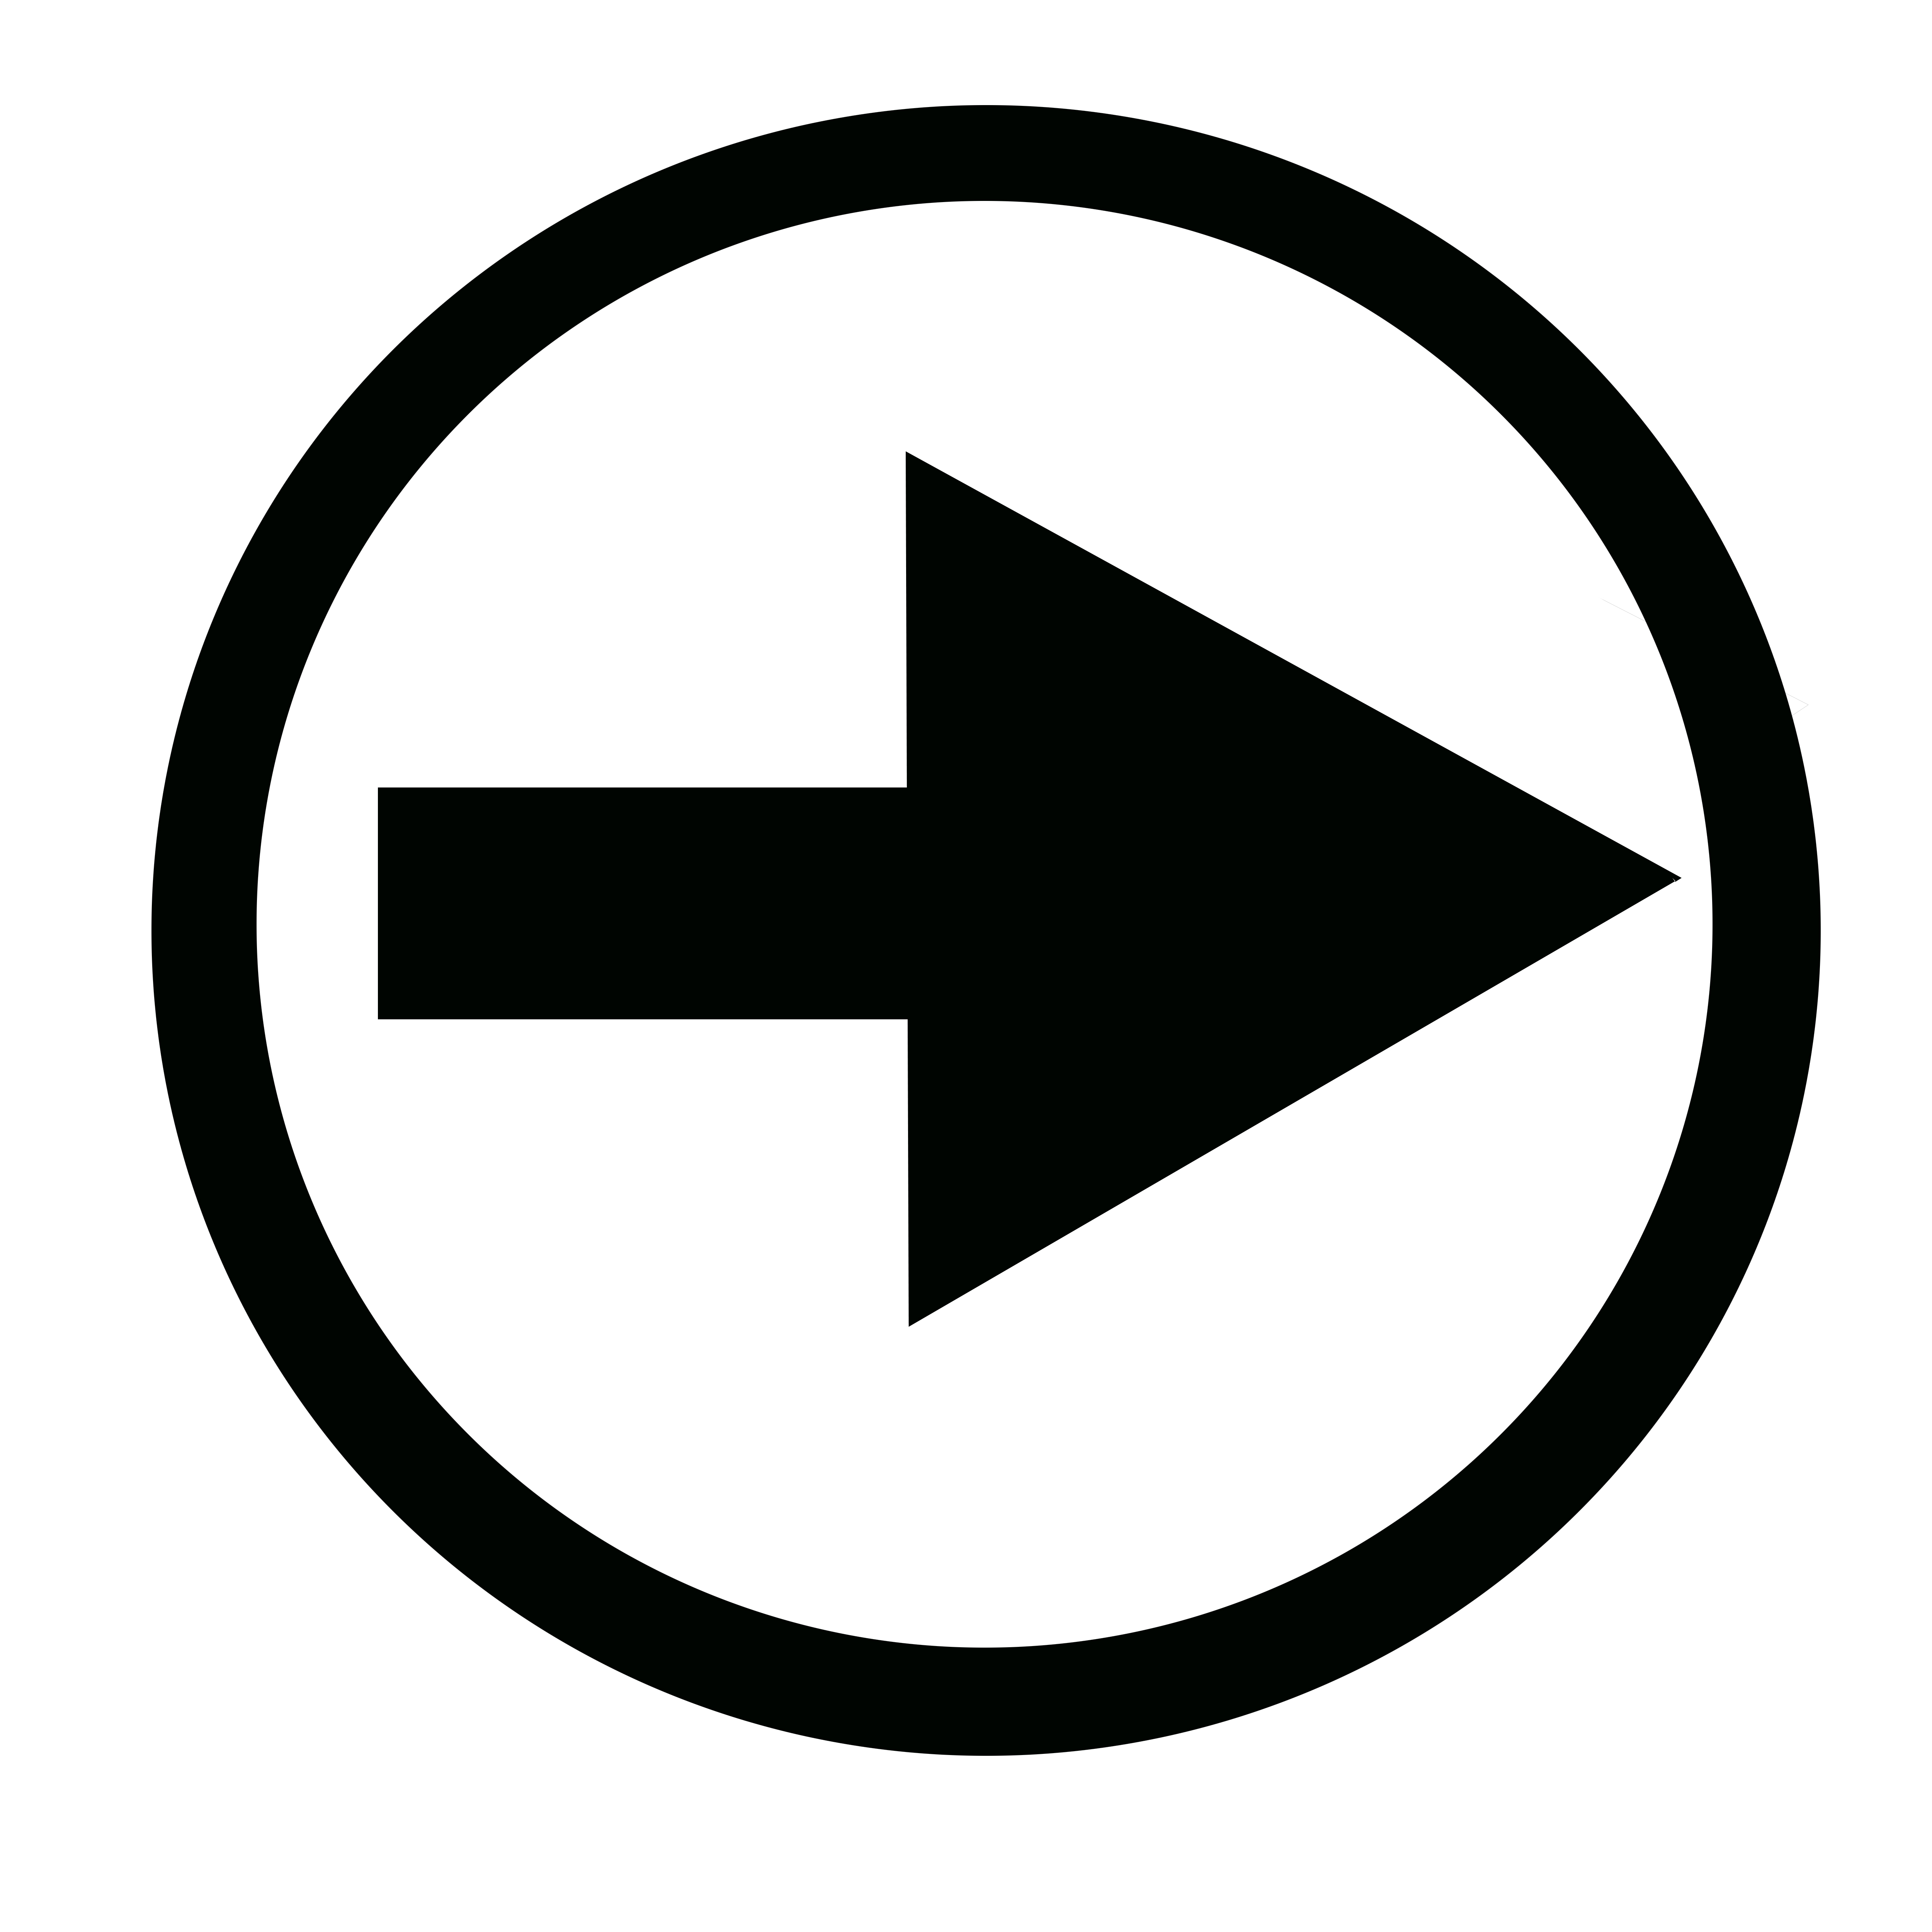 File:Right-facing-Arrow-icon.jpg - Wikimedia Commons